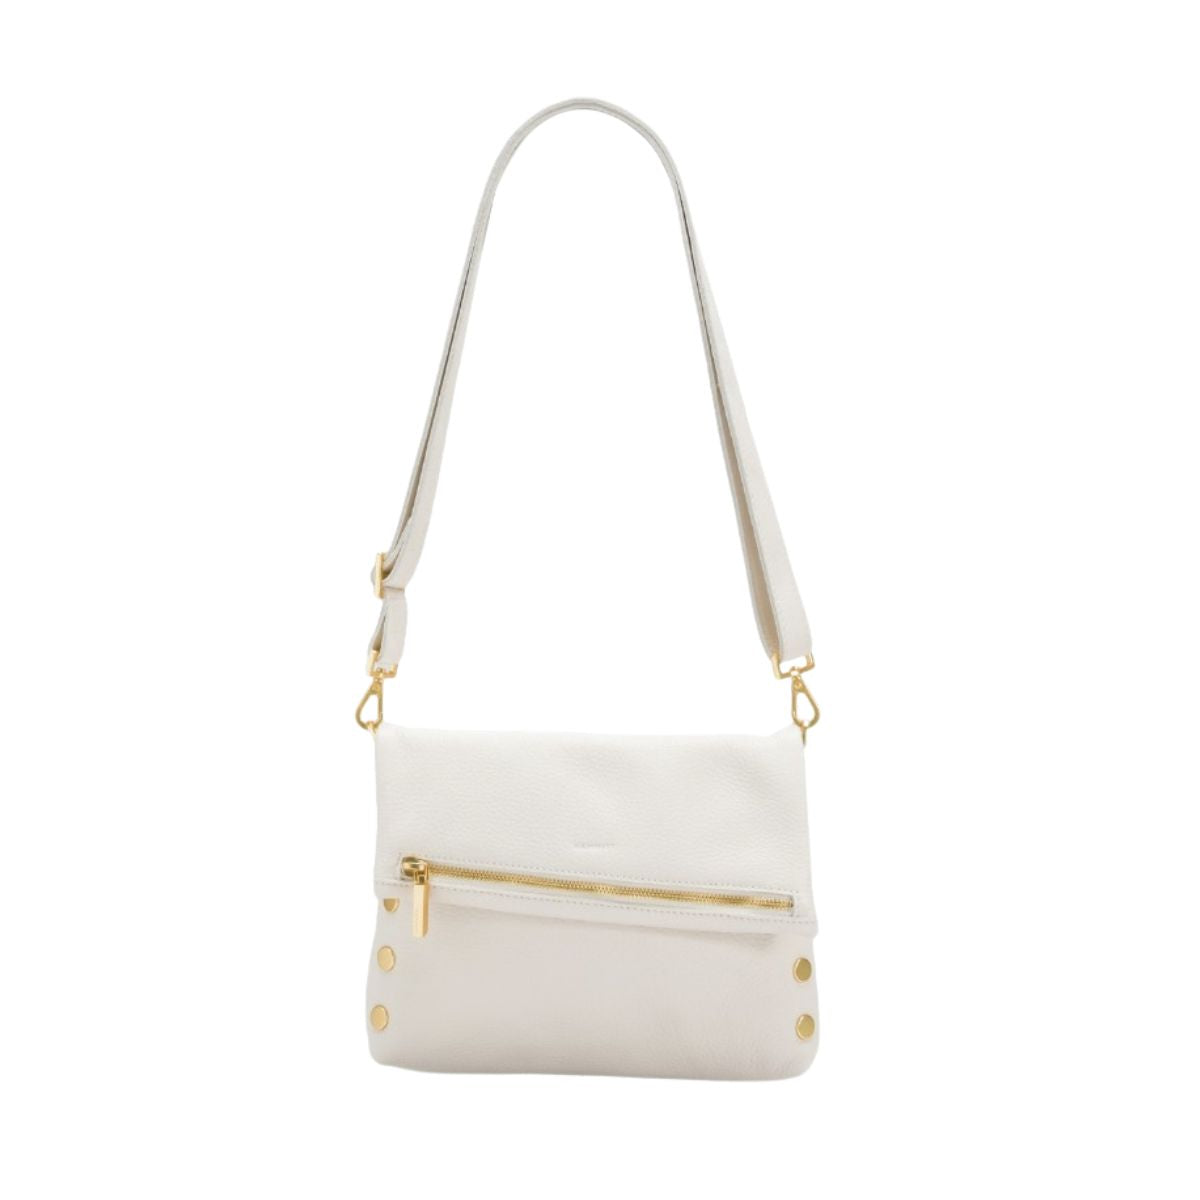 Hammitt VIP Medium Crossbody Clutch Handbag in Calla Lily White with Brushed Gold